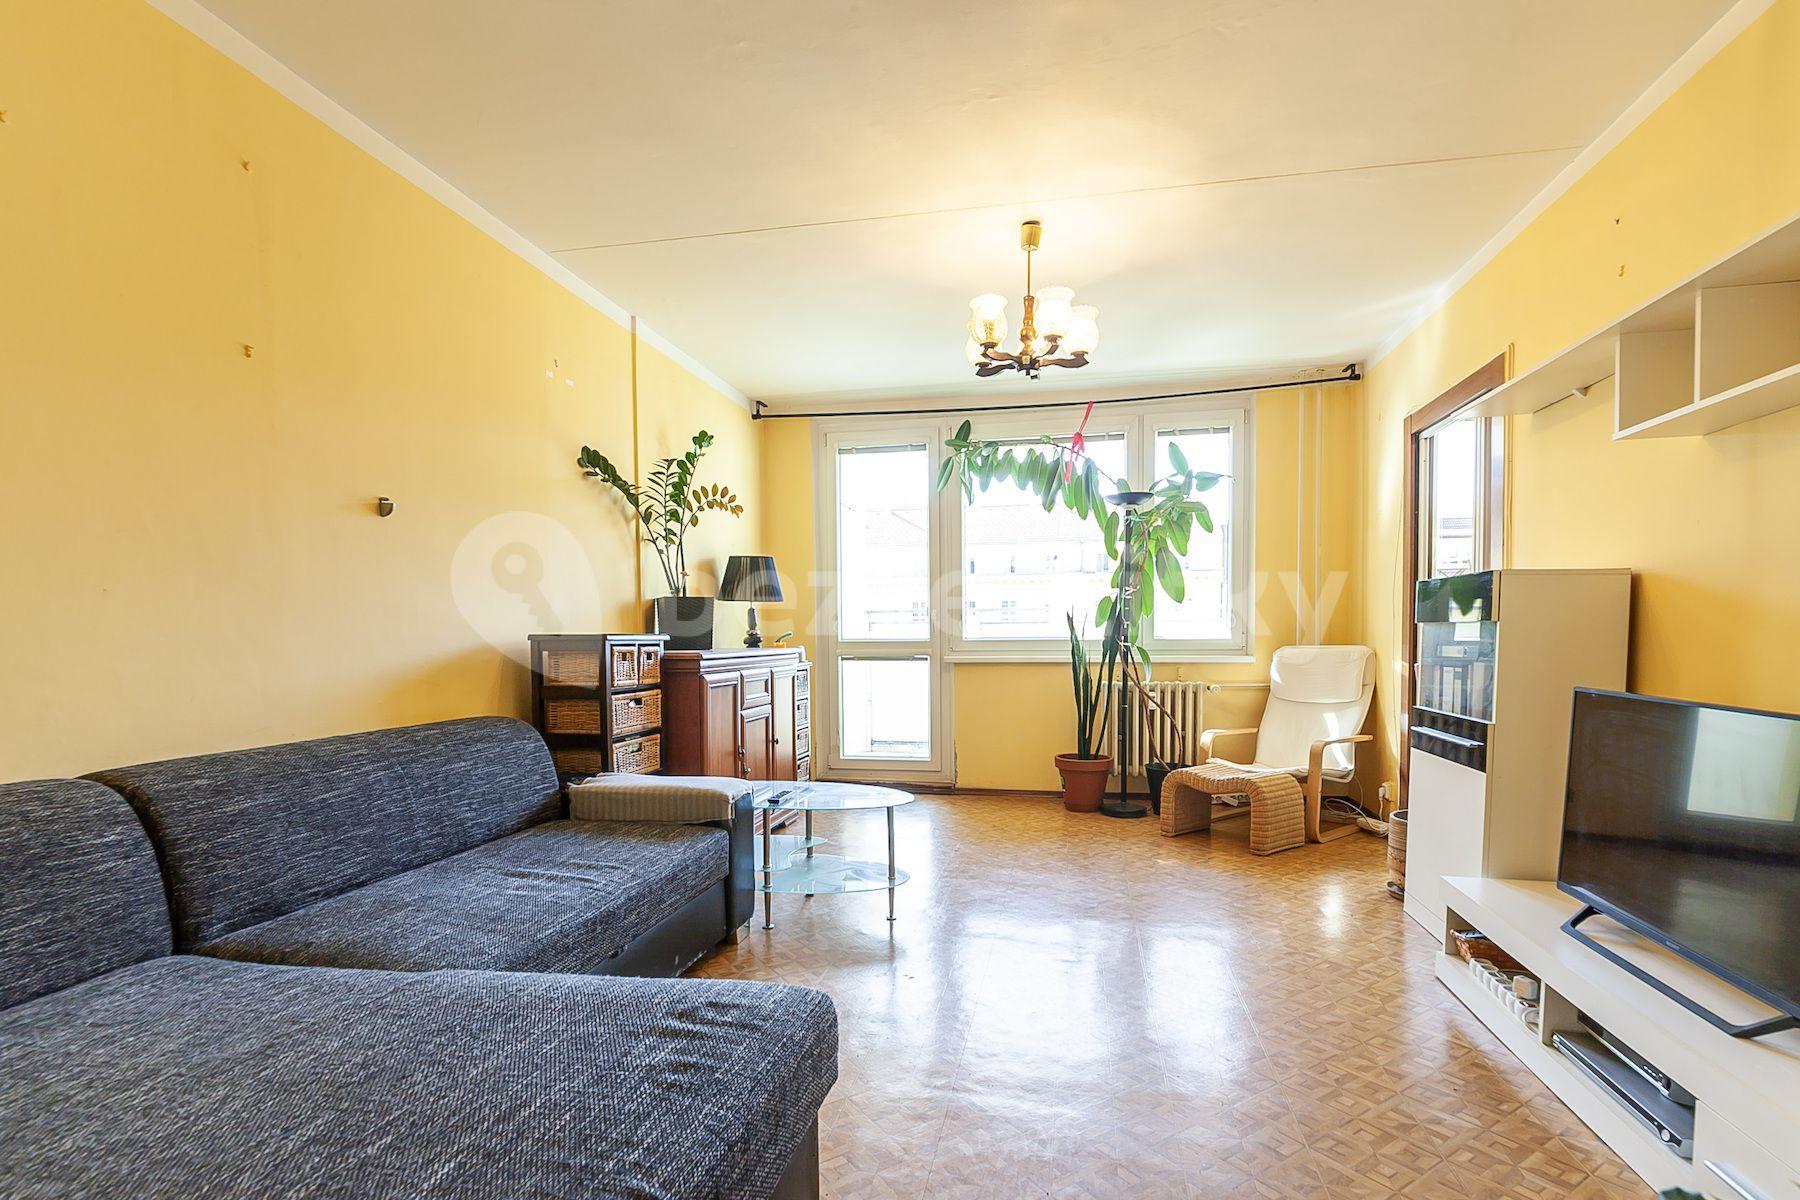 3 bedroom flat for sale, 81 m², Sabinova, Prague, Prague